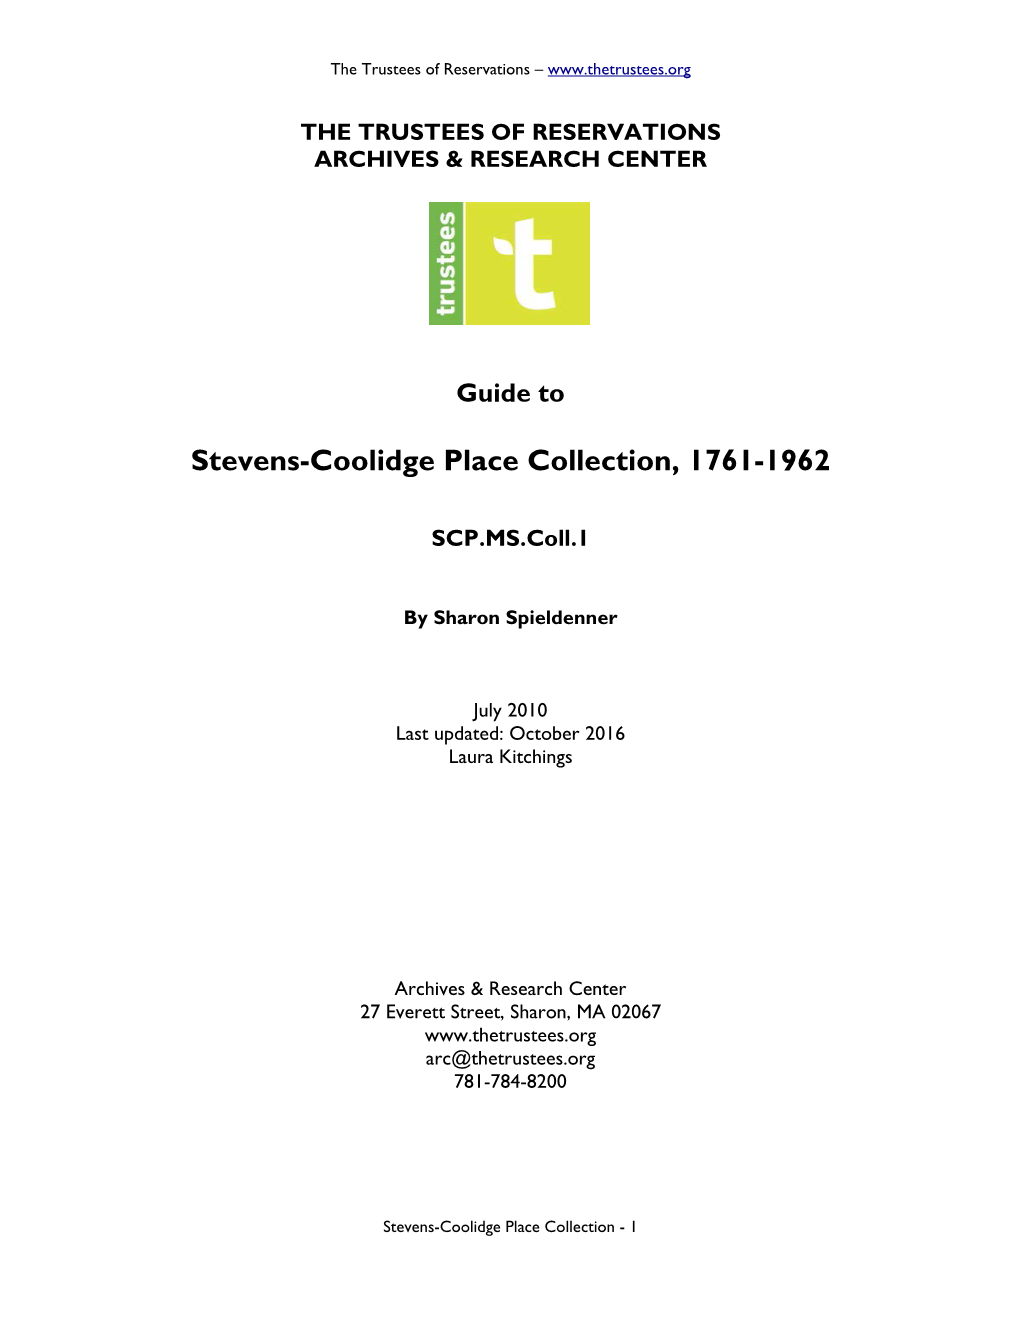 Stevens-Coolidge Place Collection, 1761-1962